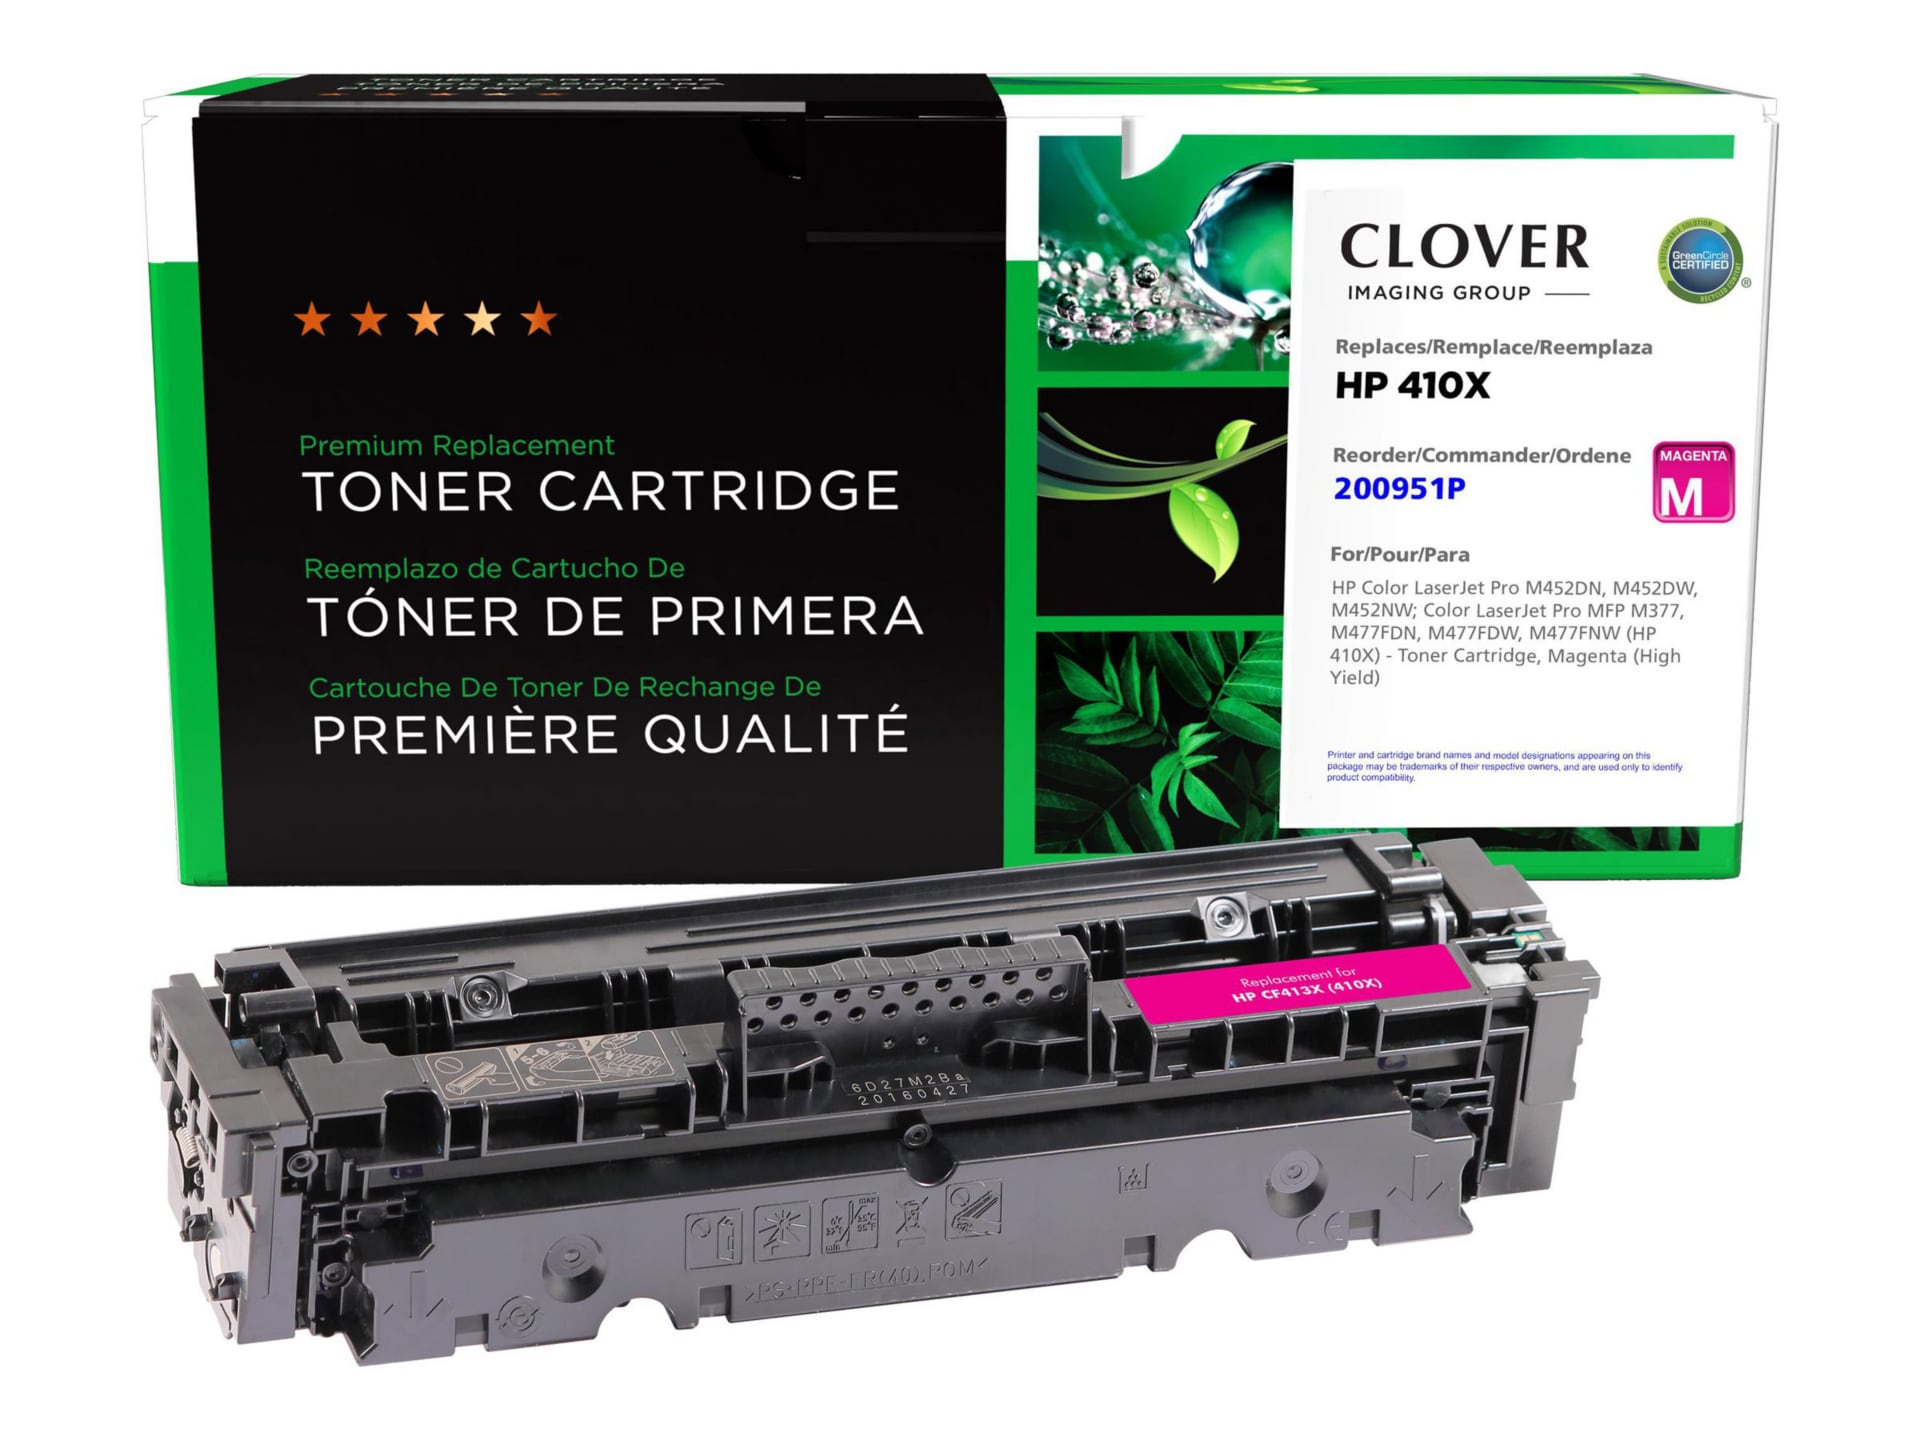 Clover Toner Remanufactured Toner fits HP 410X - Magenta